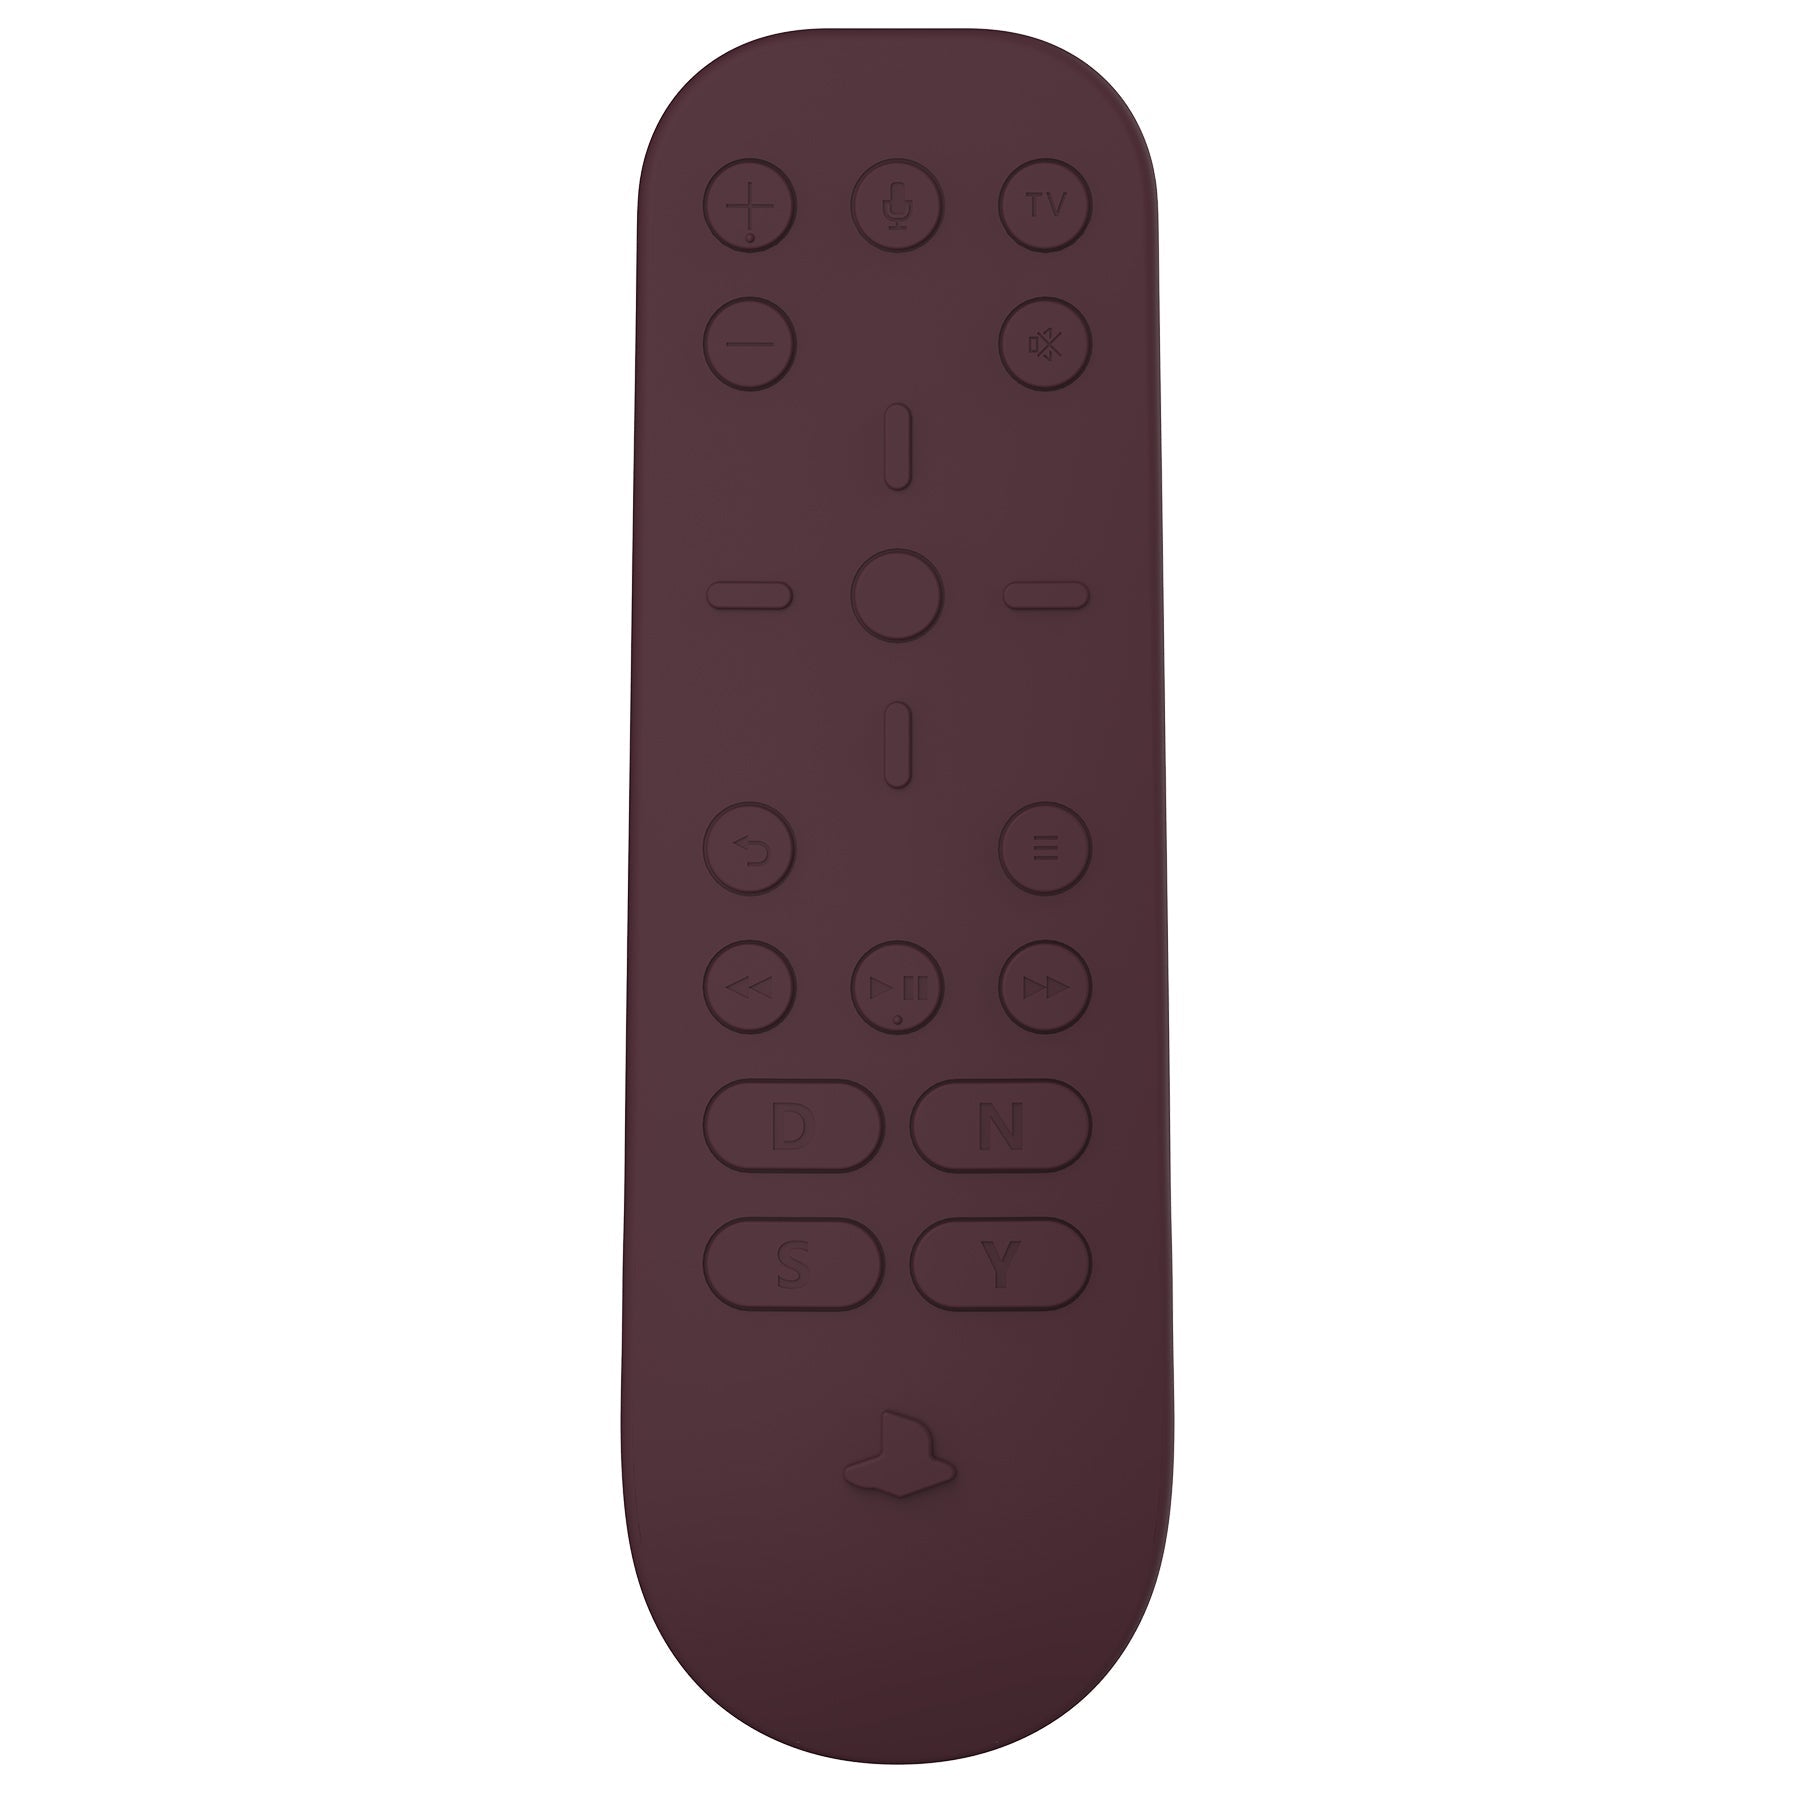 PlayVital Wine Red Silicone Protective Remote Case for PS5 Media Remote Cover, Ergonomic Design Full Body Protector Skin for PS5 Remote Control - PFPJ079 PlayVital